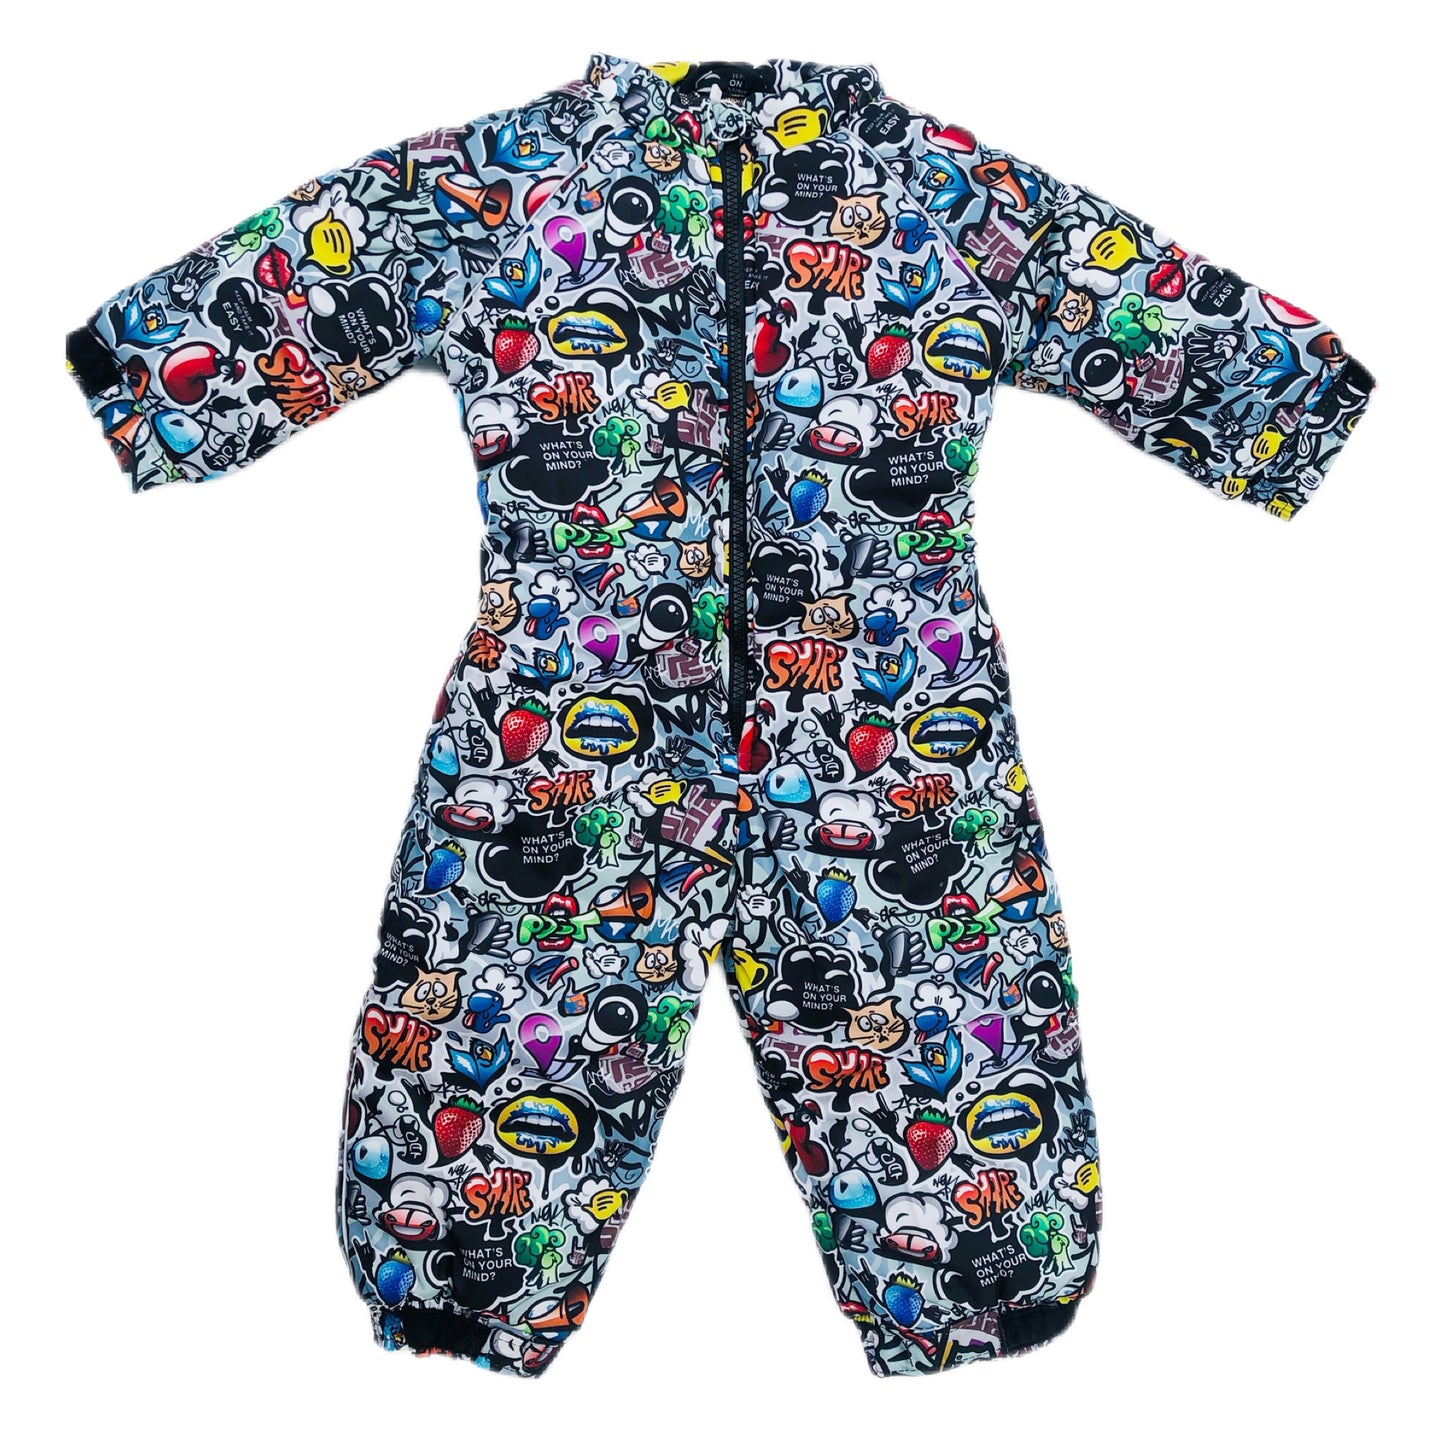 Unisex Toddler Winter Bodysuit with Hood. Megapolis motley stuff patterned